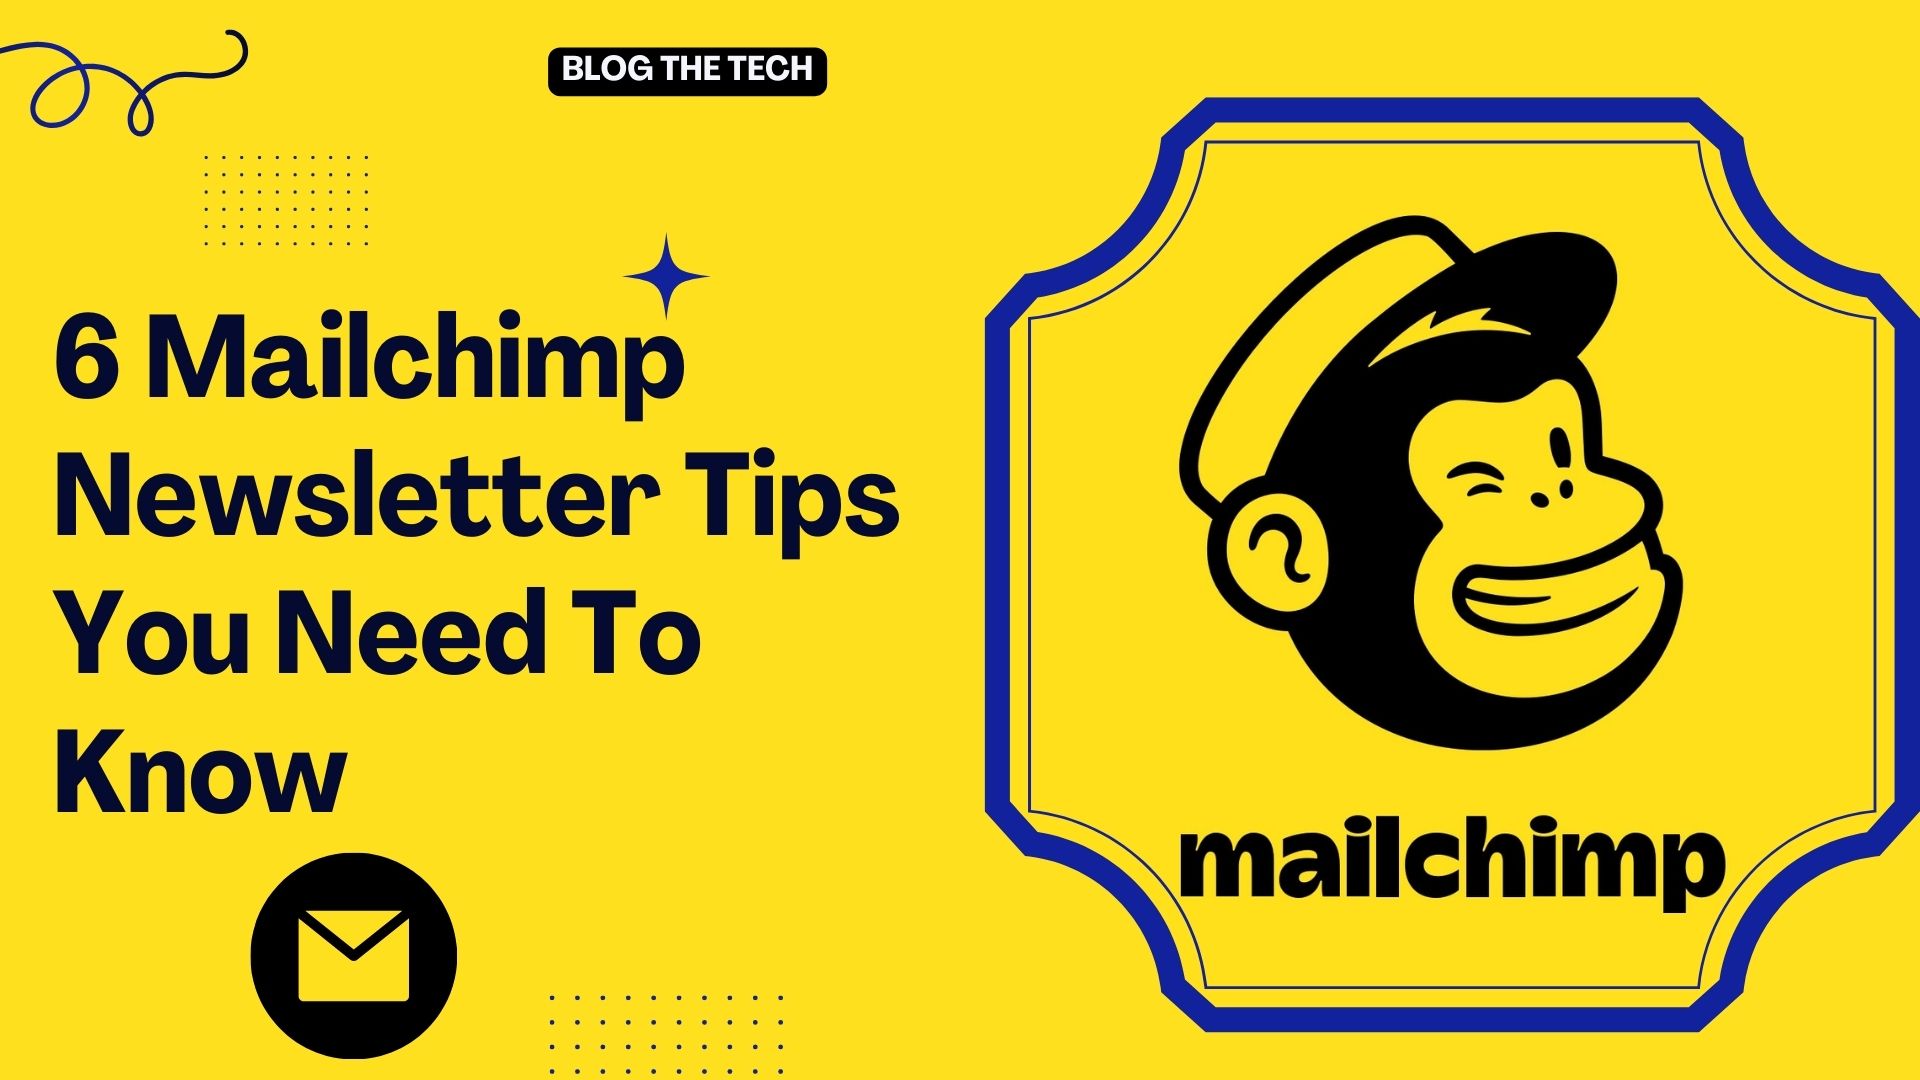 Mailchimp Newsletter Tips